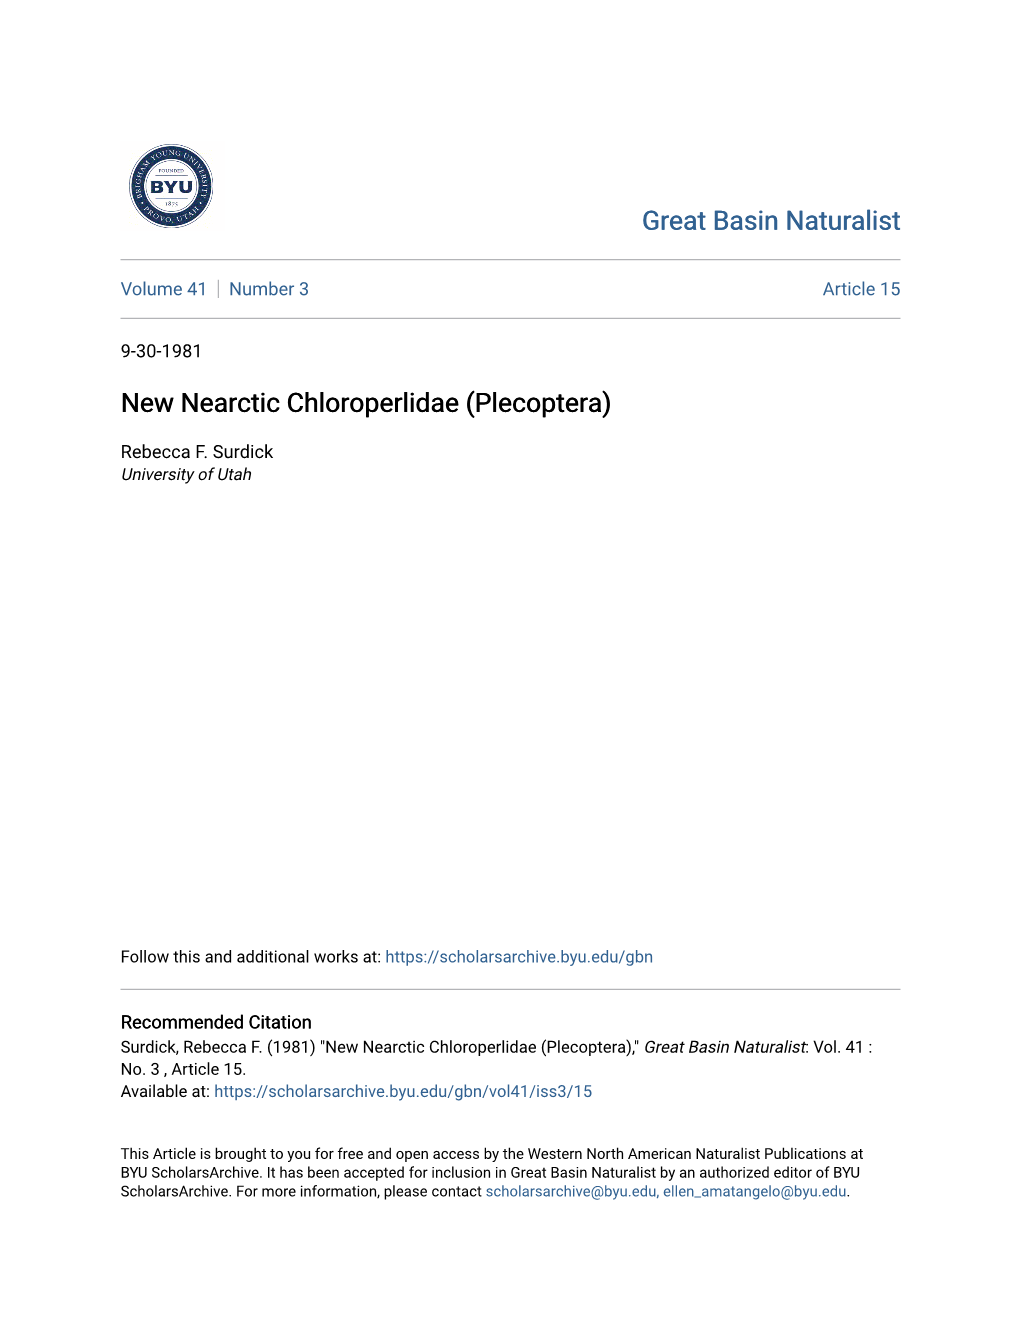 New Nearctic Chloroperlidae (Plecoptera)